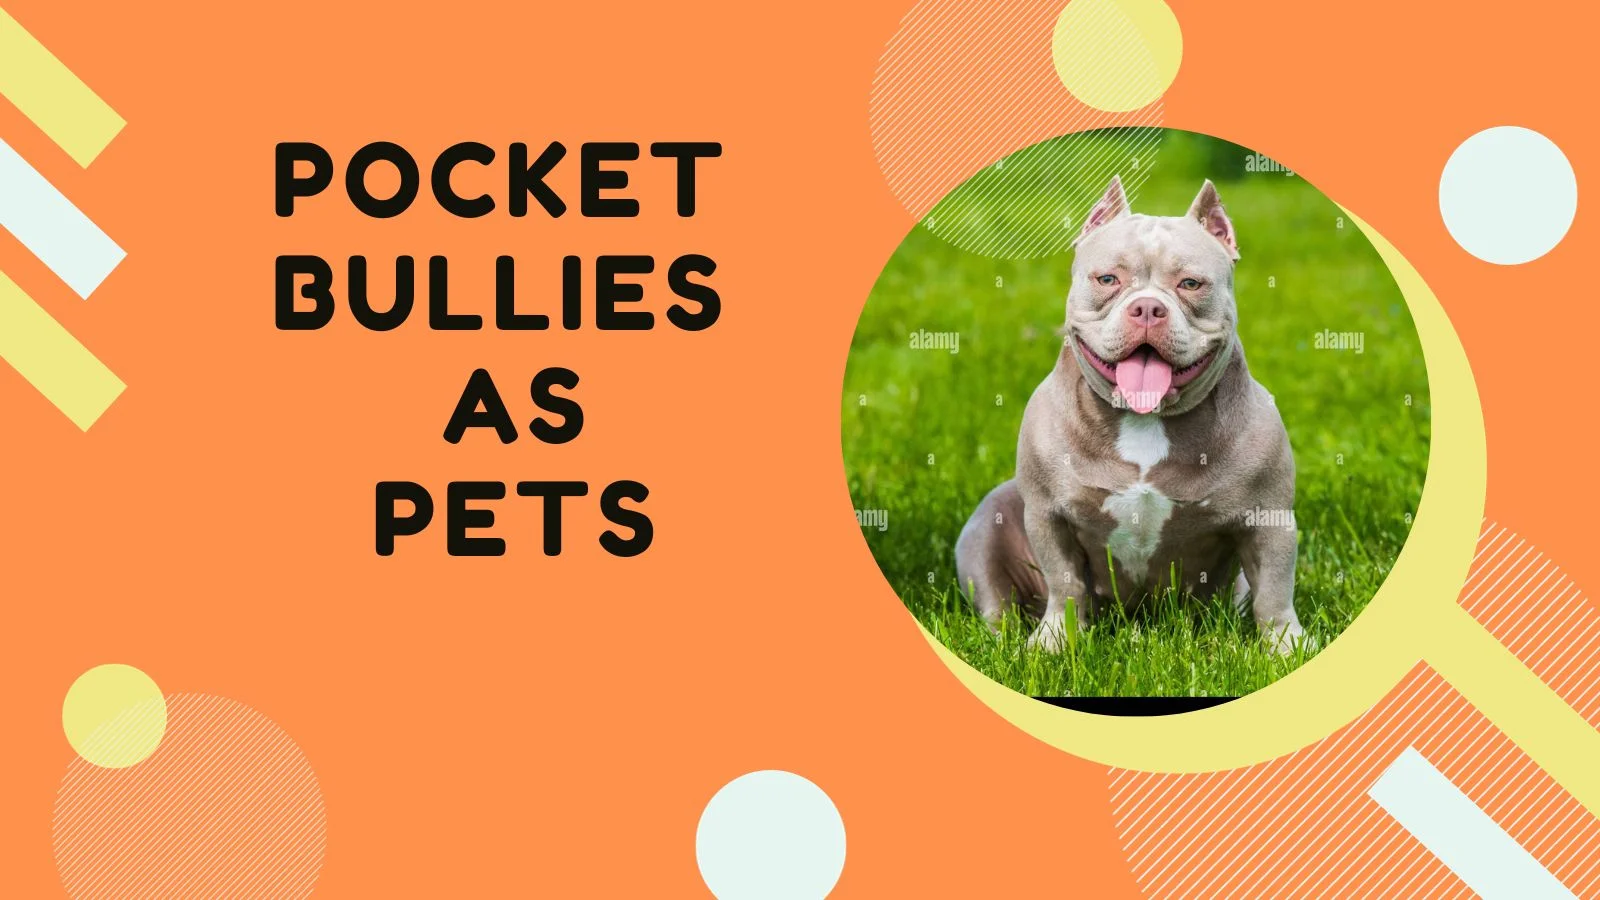 Pocket Bullies as Pets